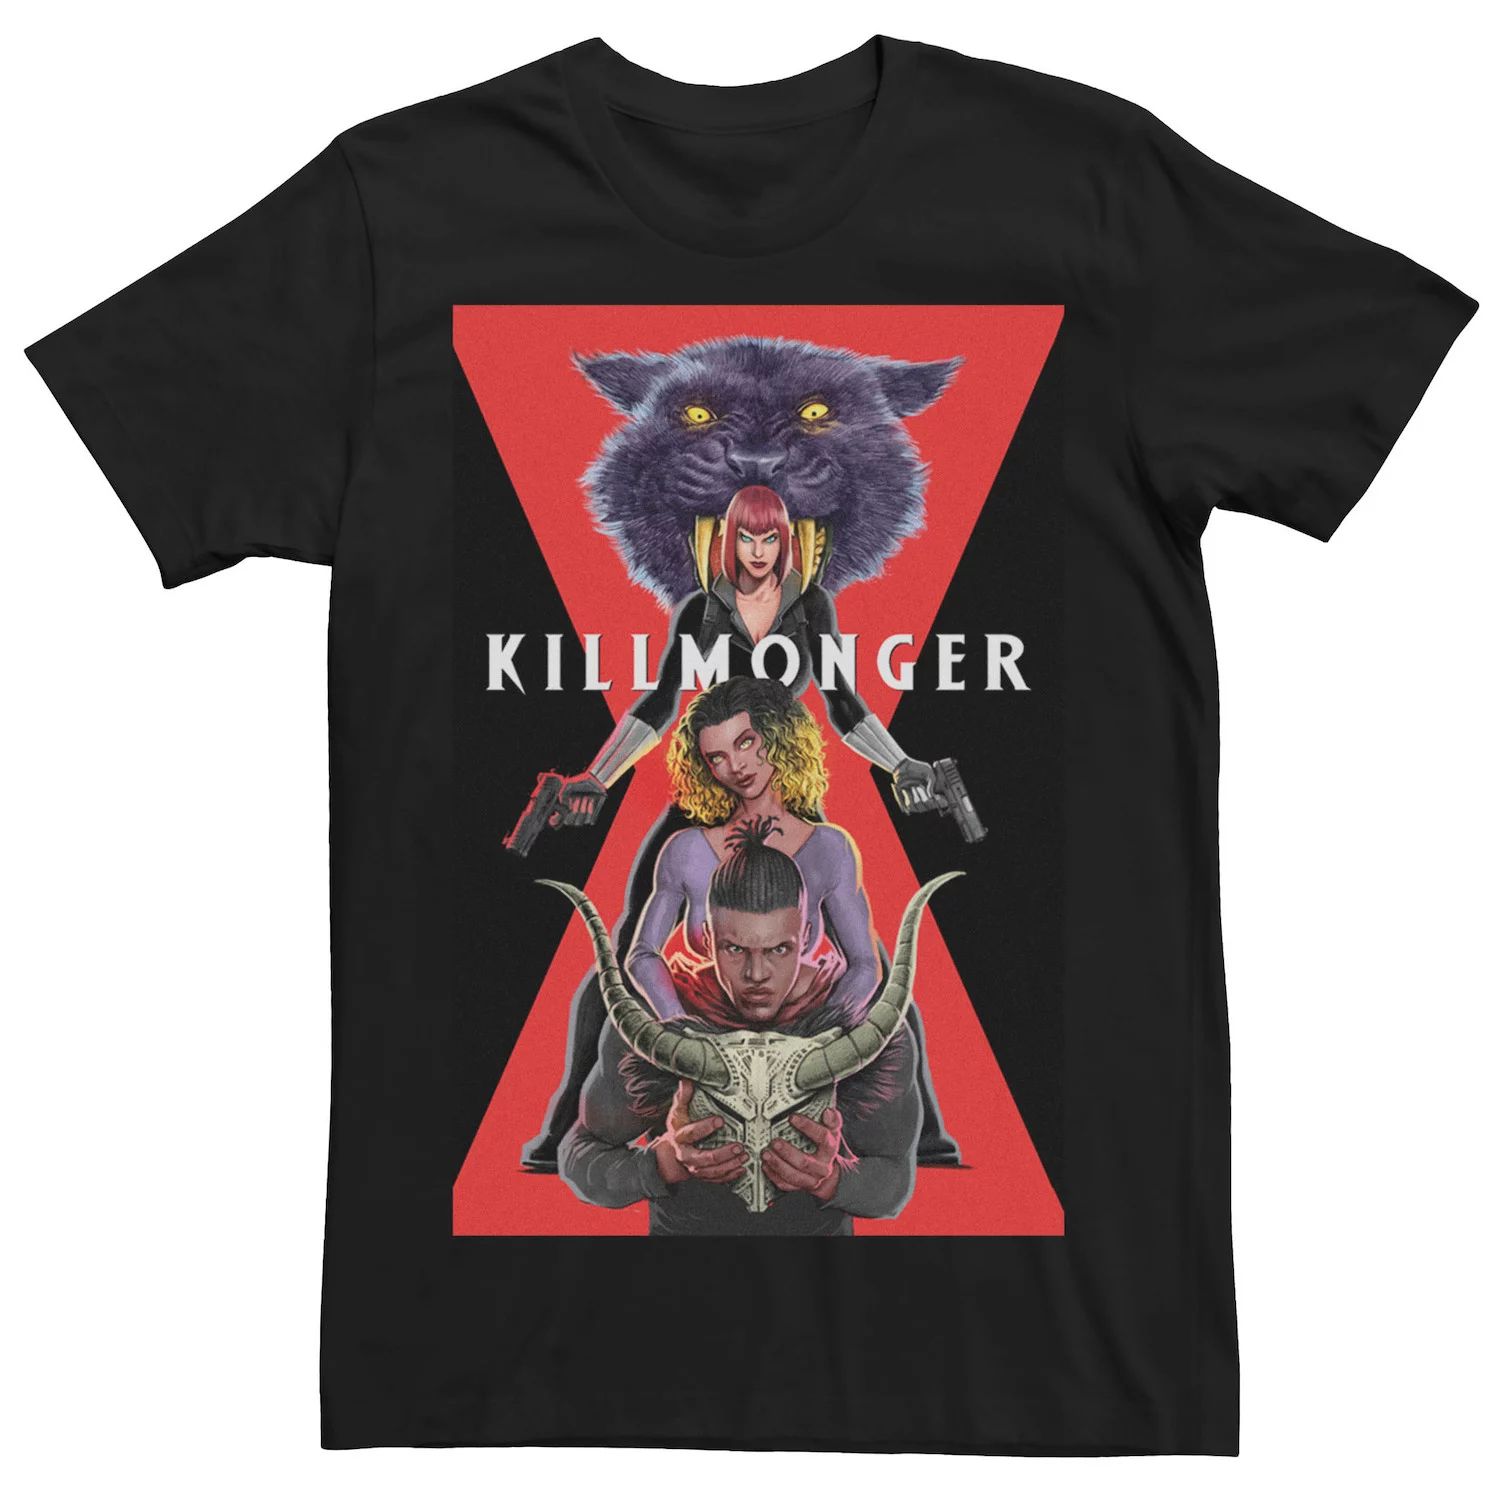 Мужская футболка Marvel Killmonger Black Widow Stack Licensed Character мужская футболка с изображением маски marvel black panther erik killmonger licensed character